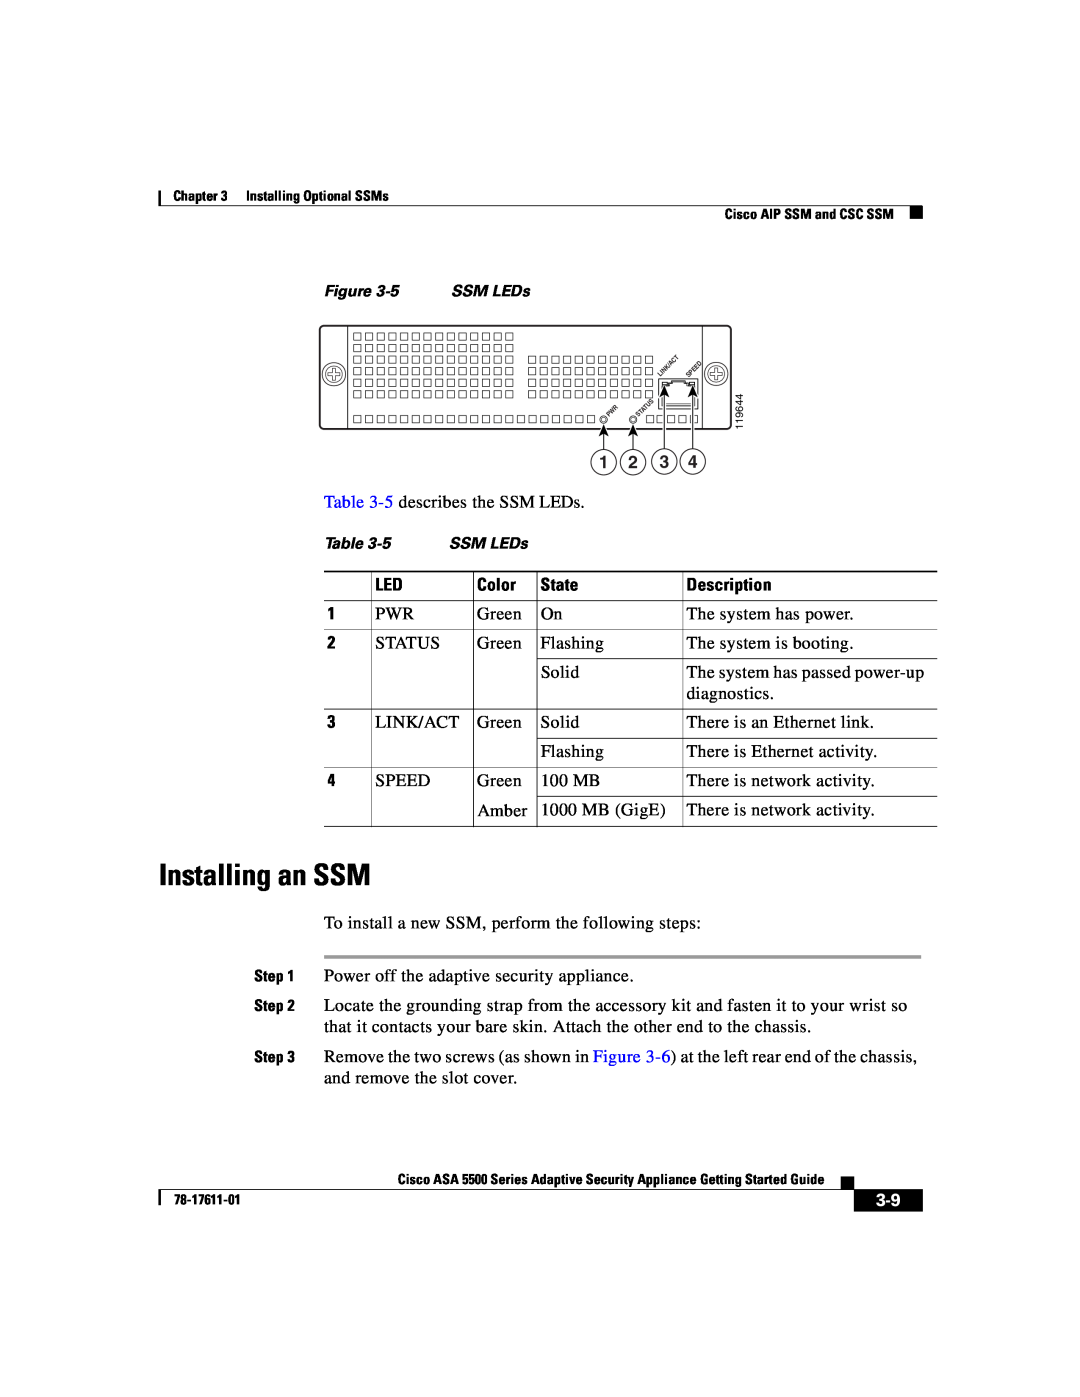 Cisco Systems ASA 5500 manual Installing an SSM, 1 2 3, Color, State, Description 